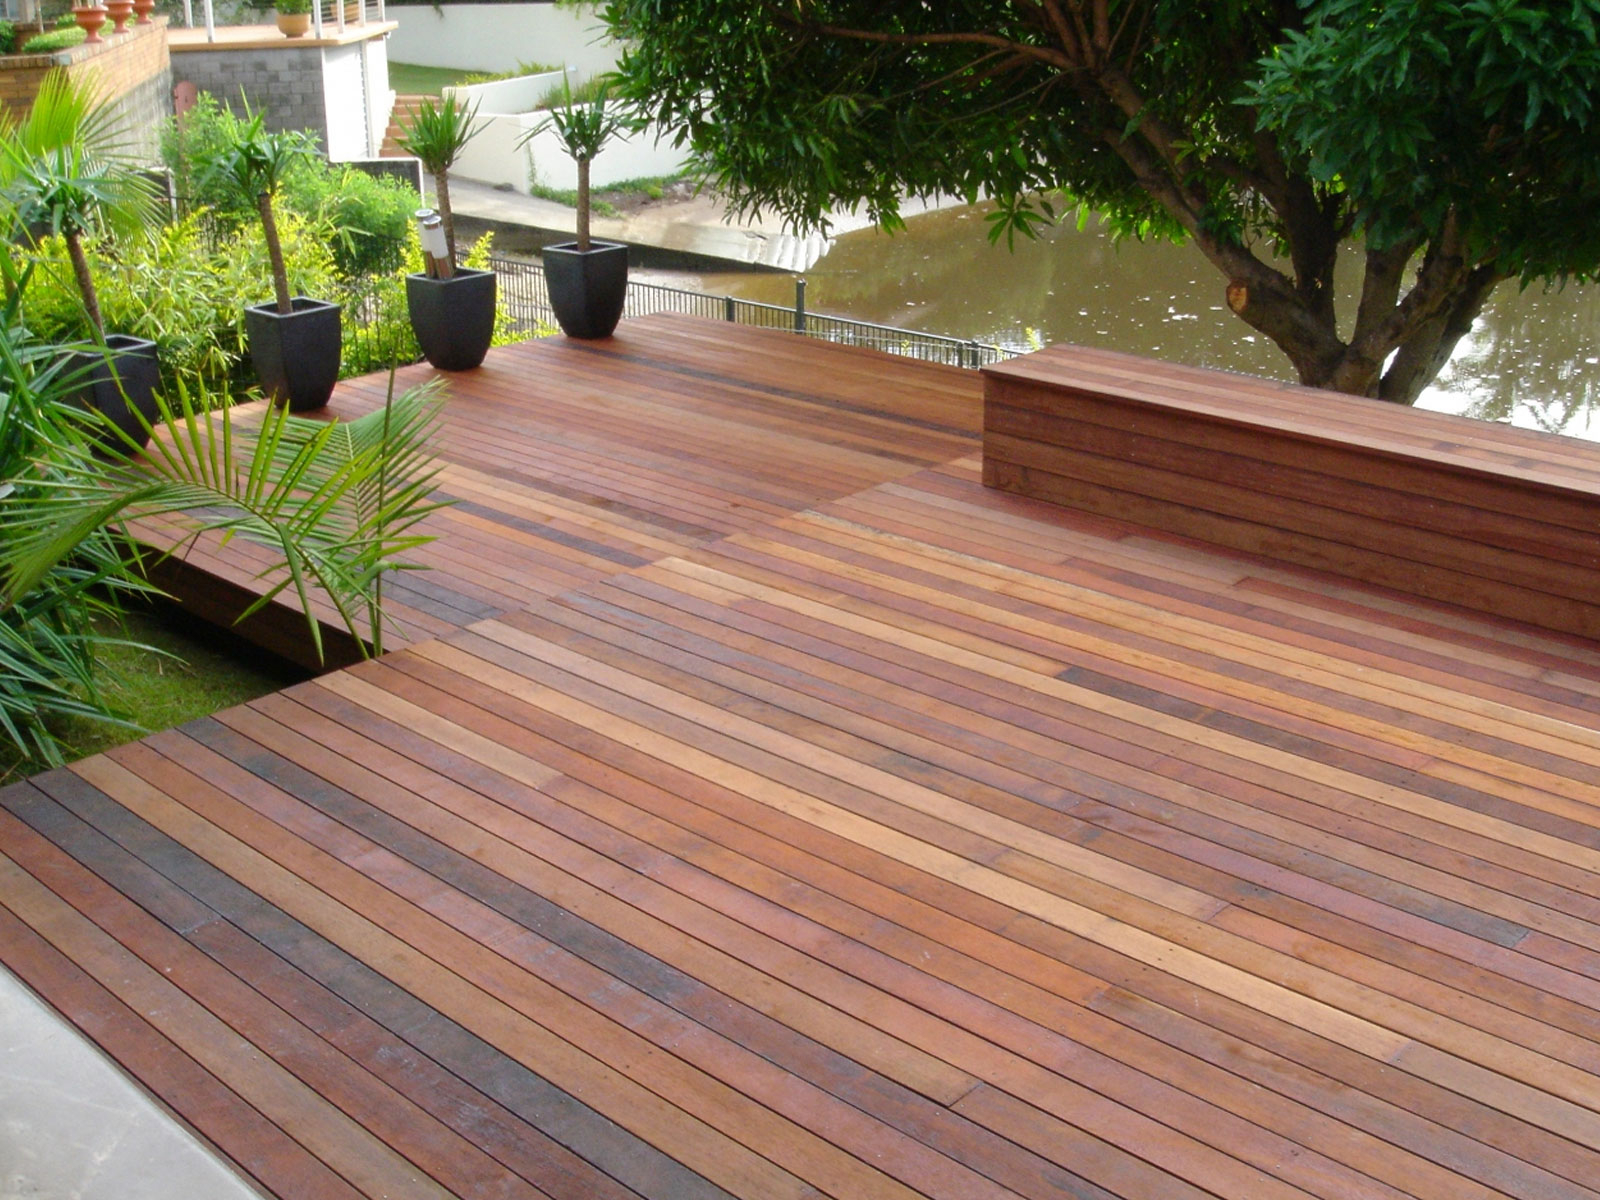 Gallery Timber Flooring Decking Screening Bamboo Pine within size 1600 X 1200